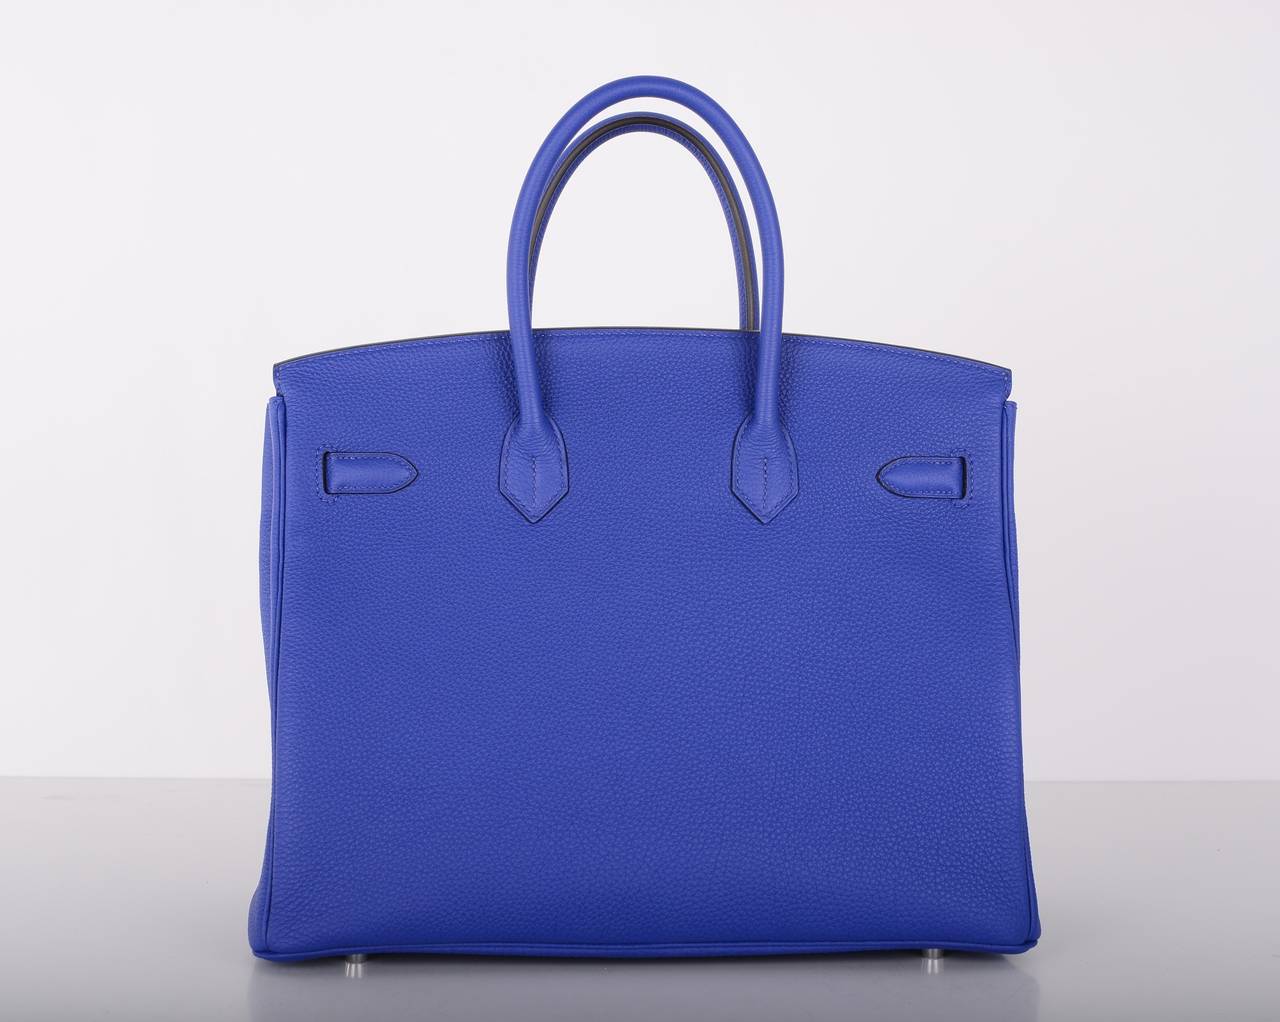 Women's HERMES BIRKIN BAG 35cm BLUE ELECTRIC 35CM OMGGGG For Sale